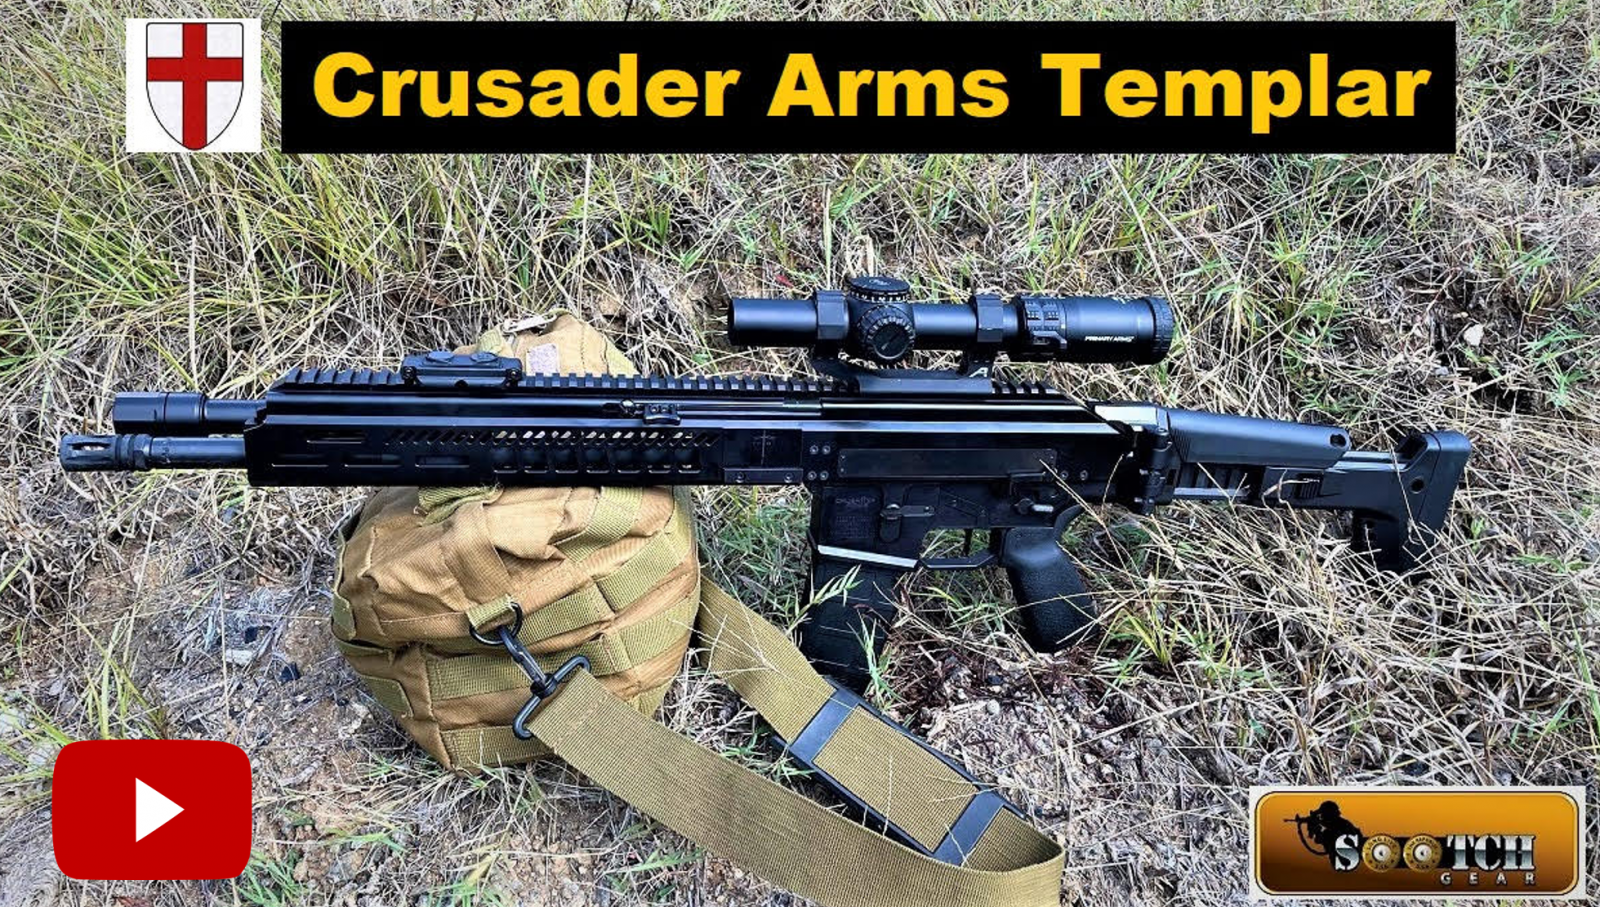 Crusader Arms Templar Sootch Thumbnail.png